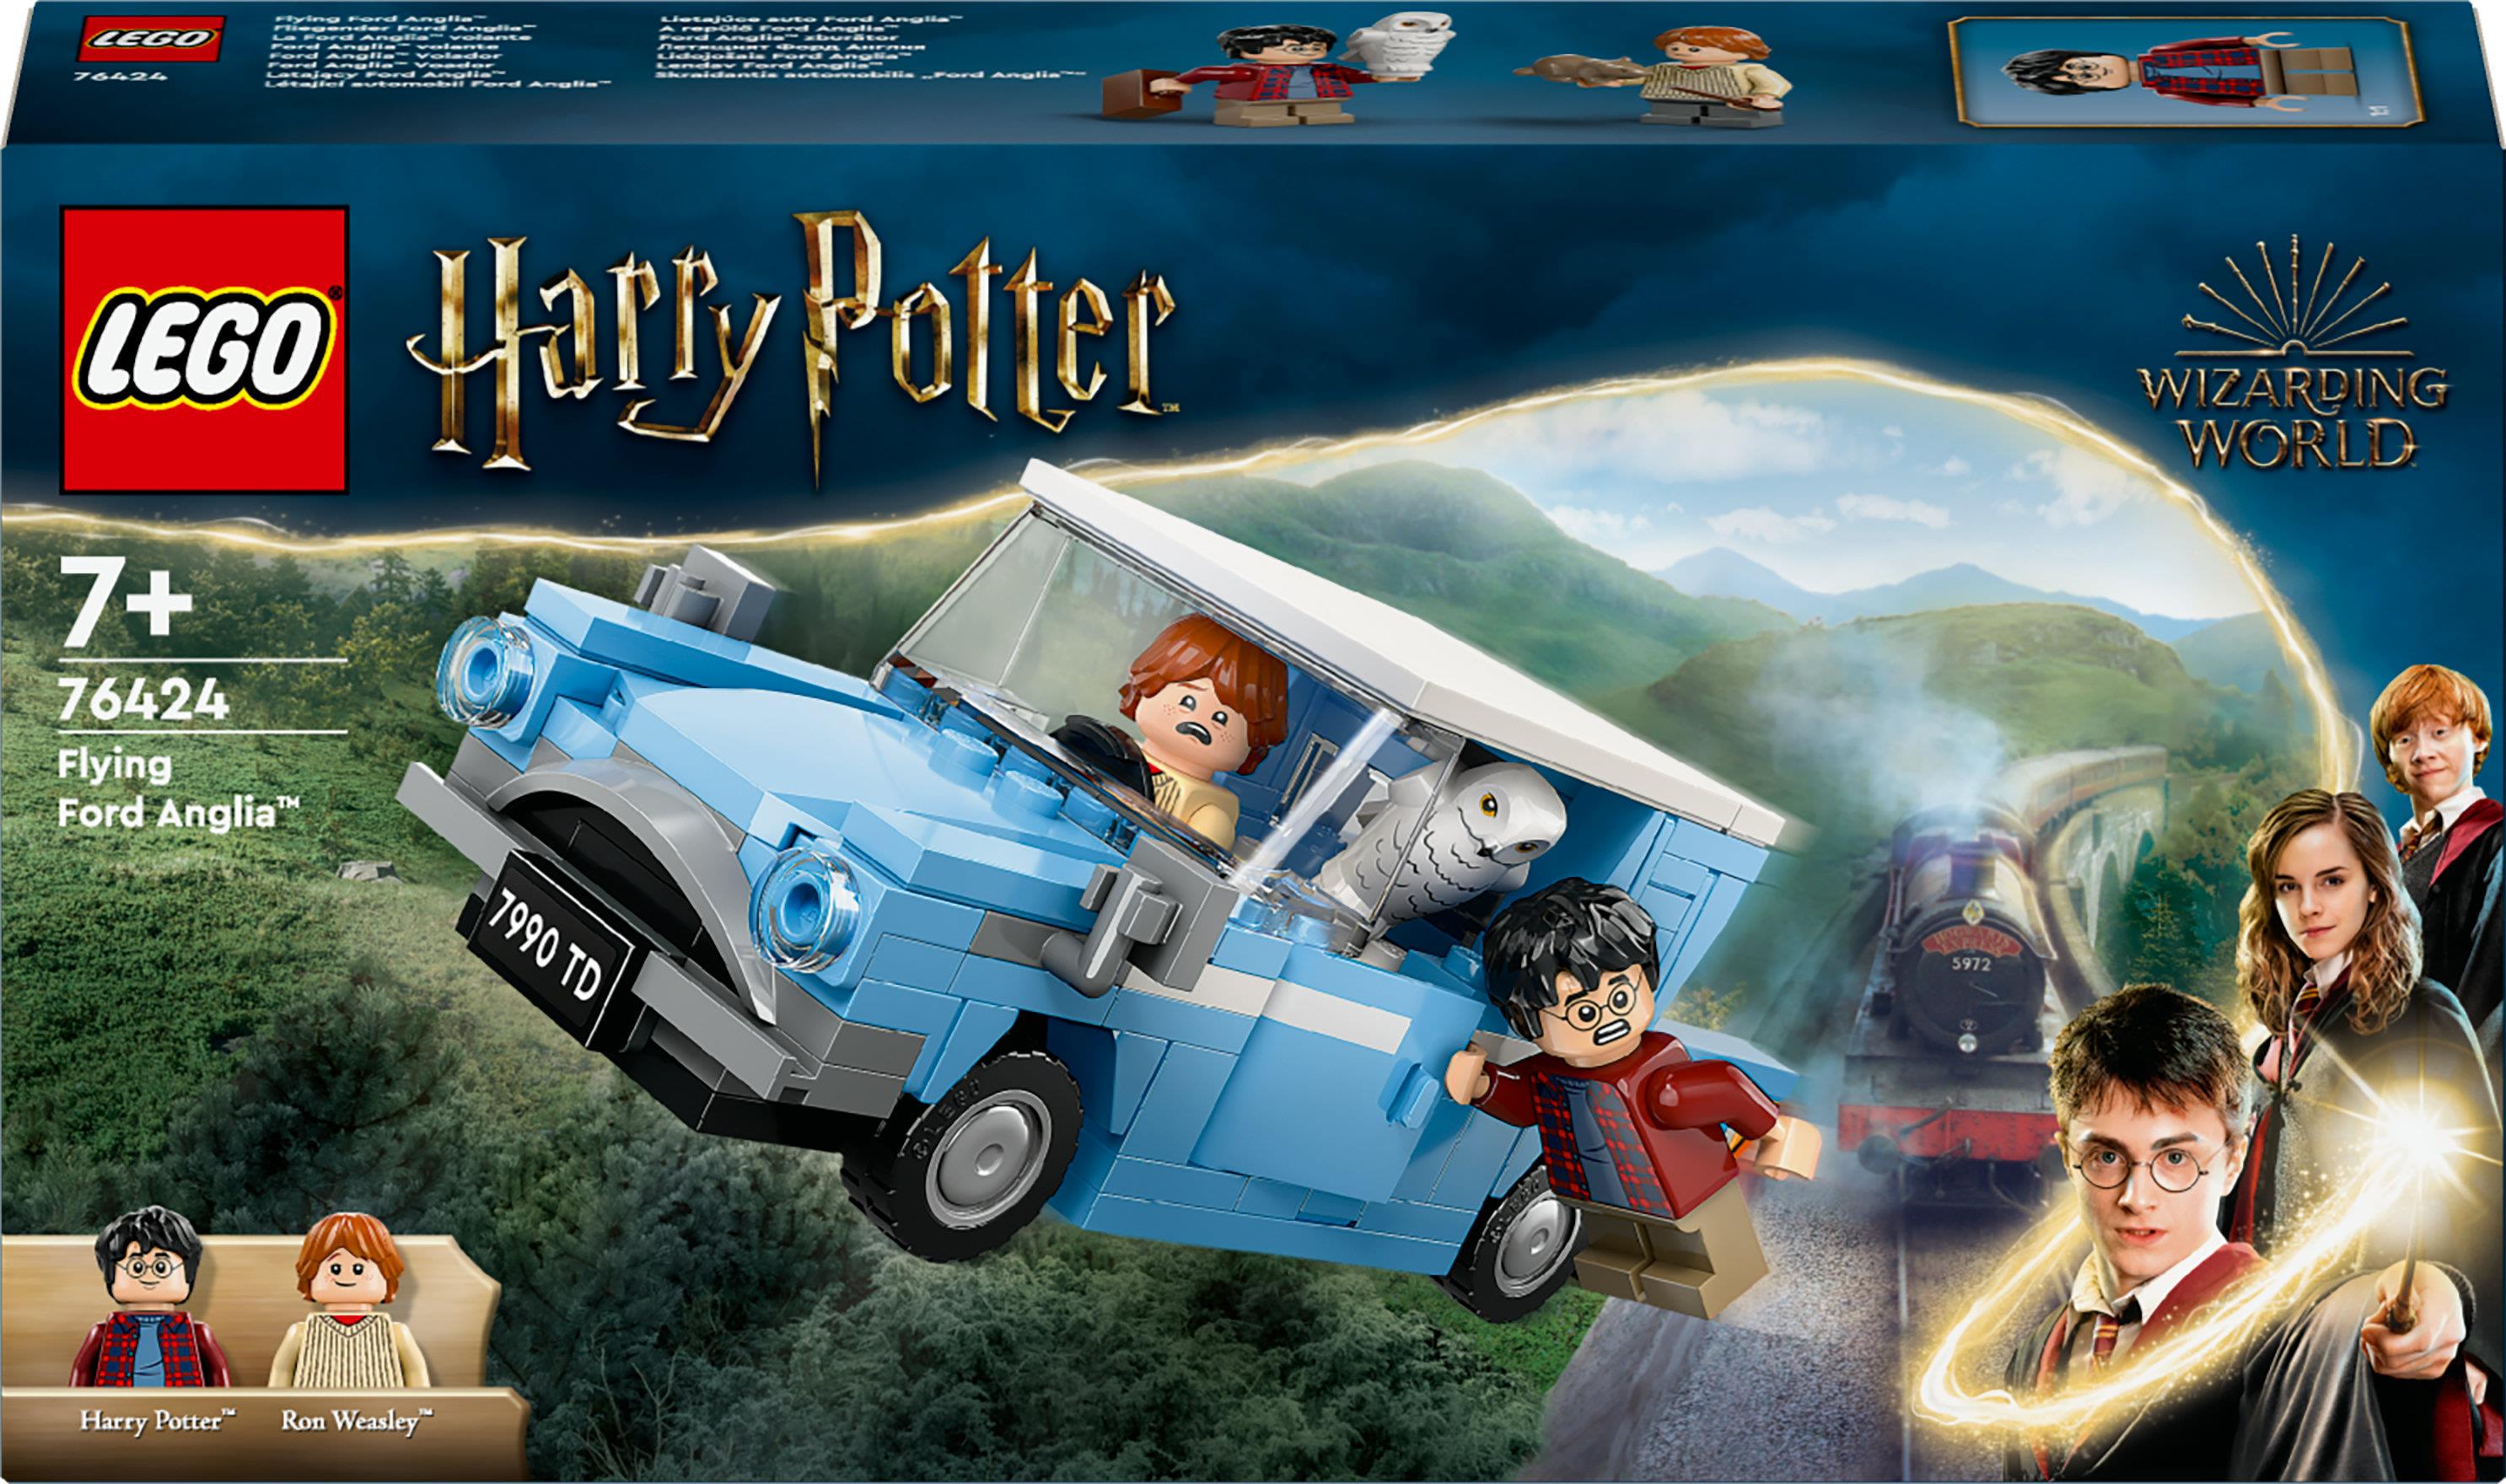 LEGO Harry Potter 76424